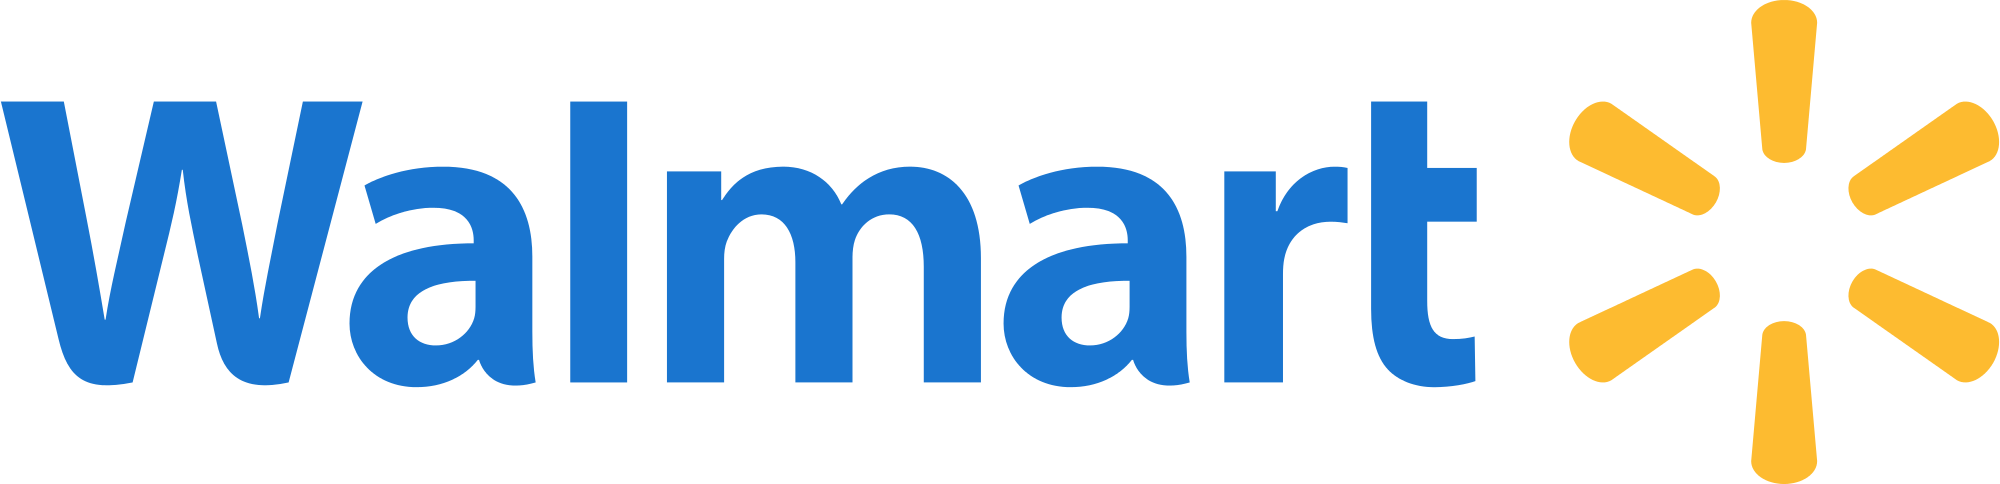 logo walmart 02